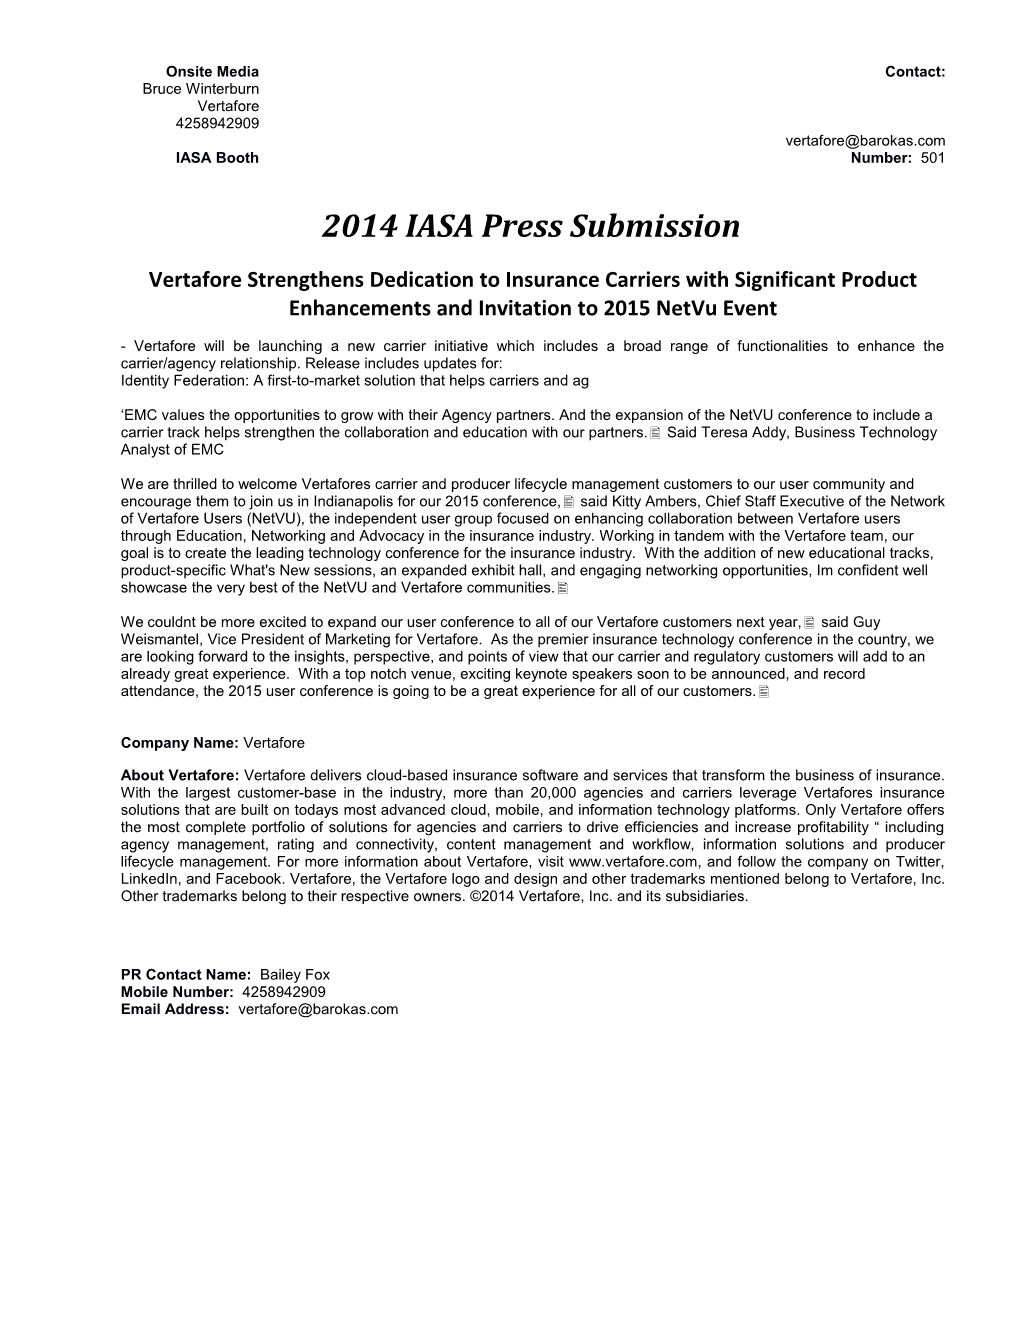 2014 IASA Press Submission